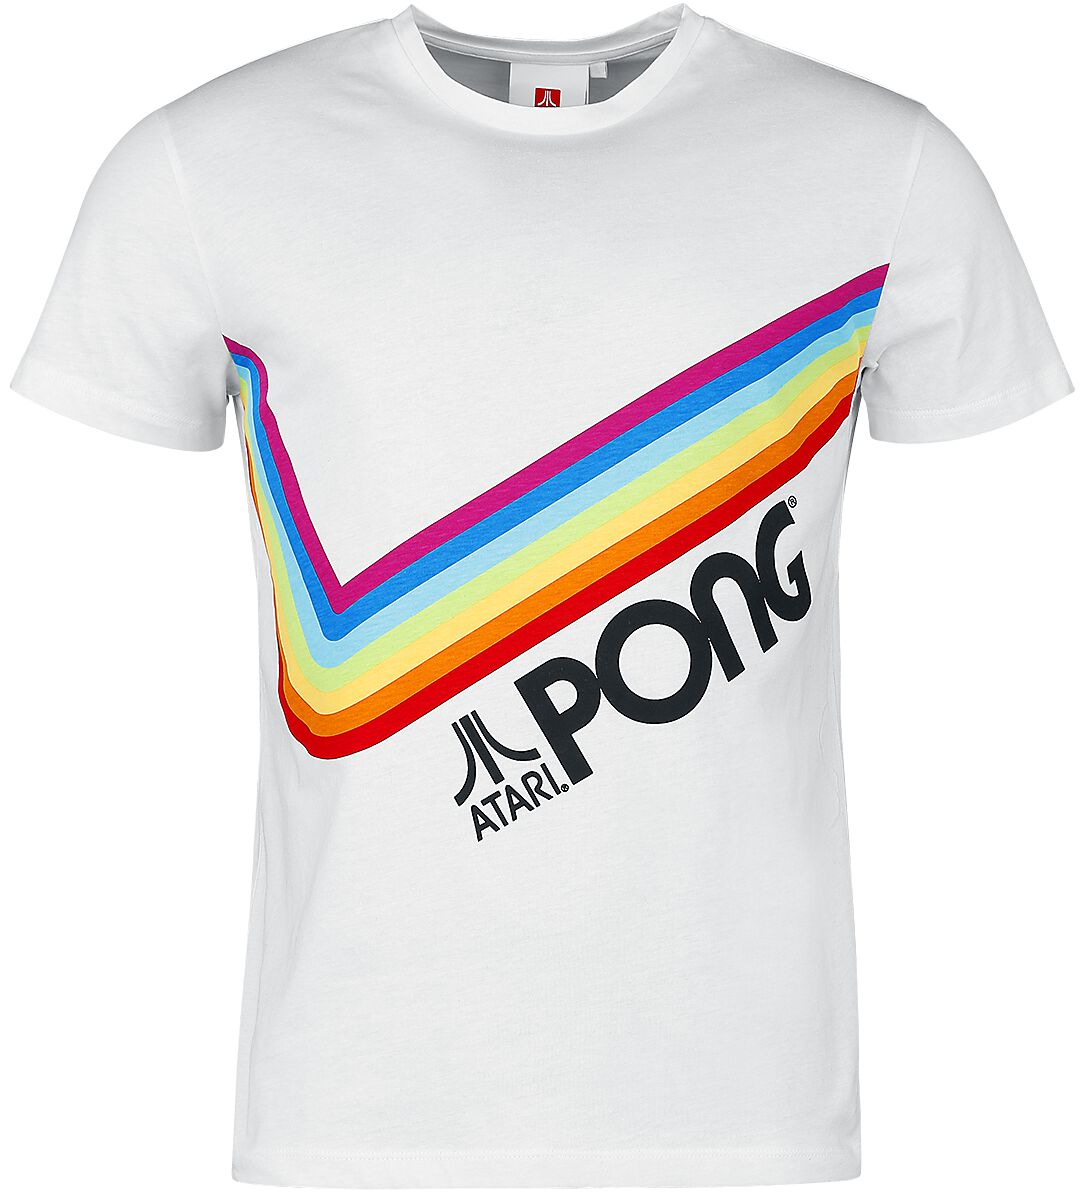 Atari Pong - Pride Rainbow T-Shirt weiß in XL von Atari